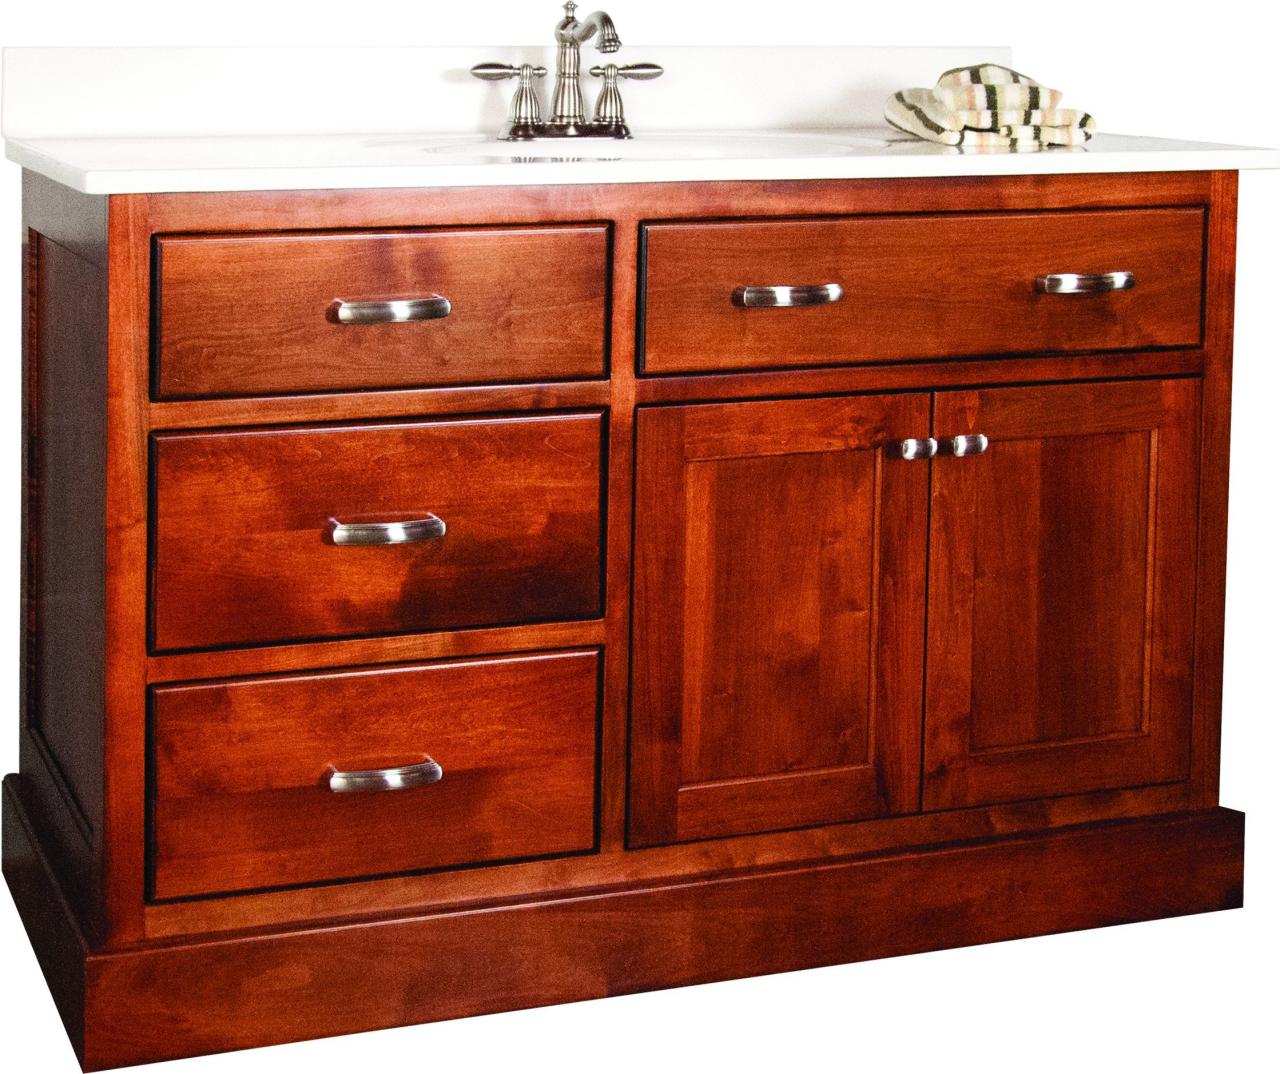 Amish vanity bathroom sink made cabinet wood solid cvh granite standing finest handcrafting its sinks